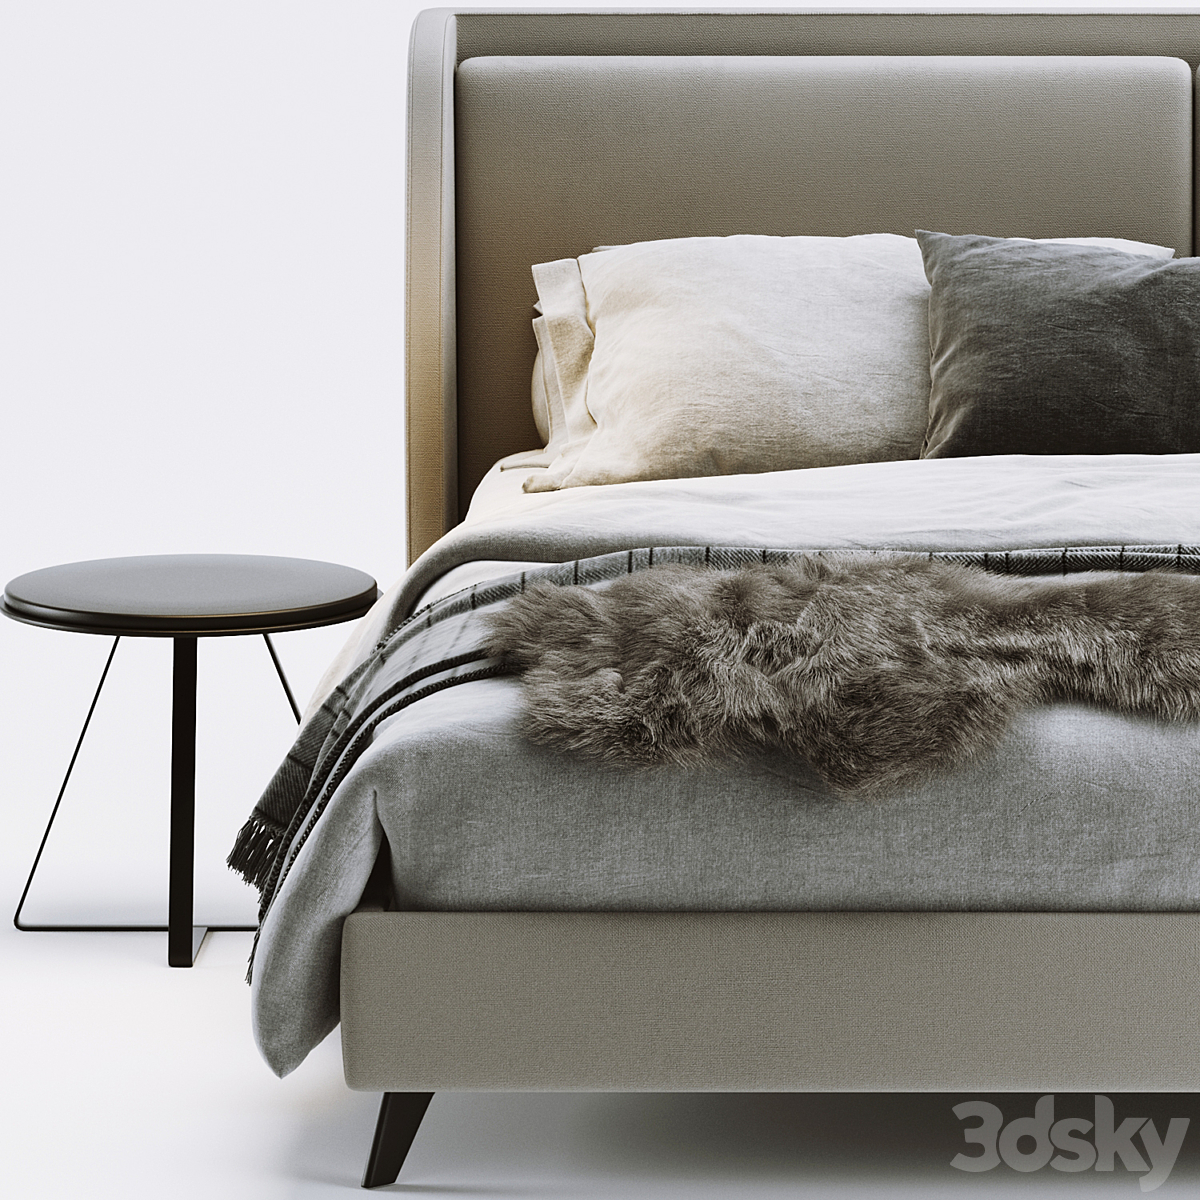 Sofa & Chair Company Enzo Bed